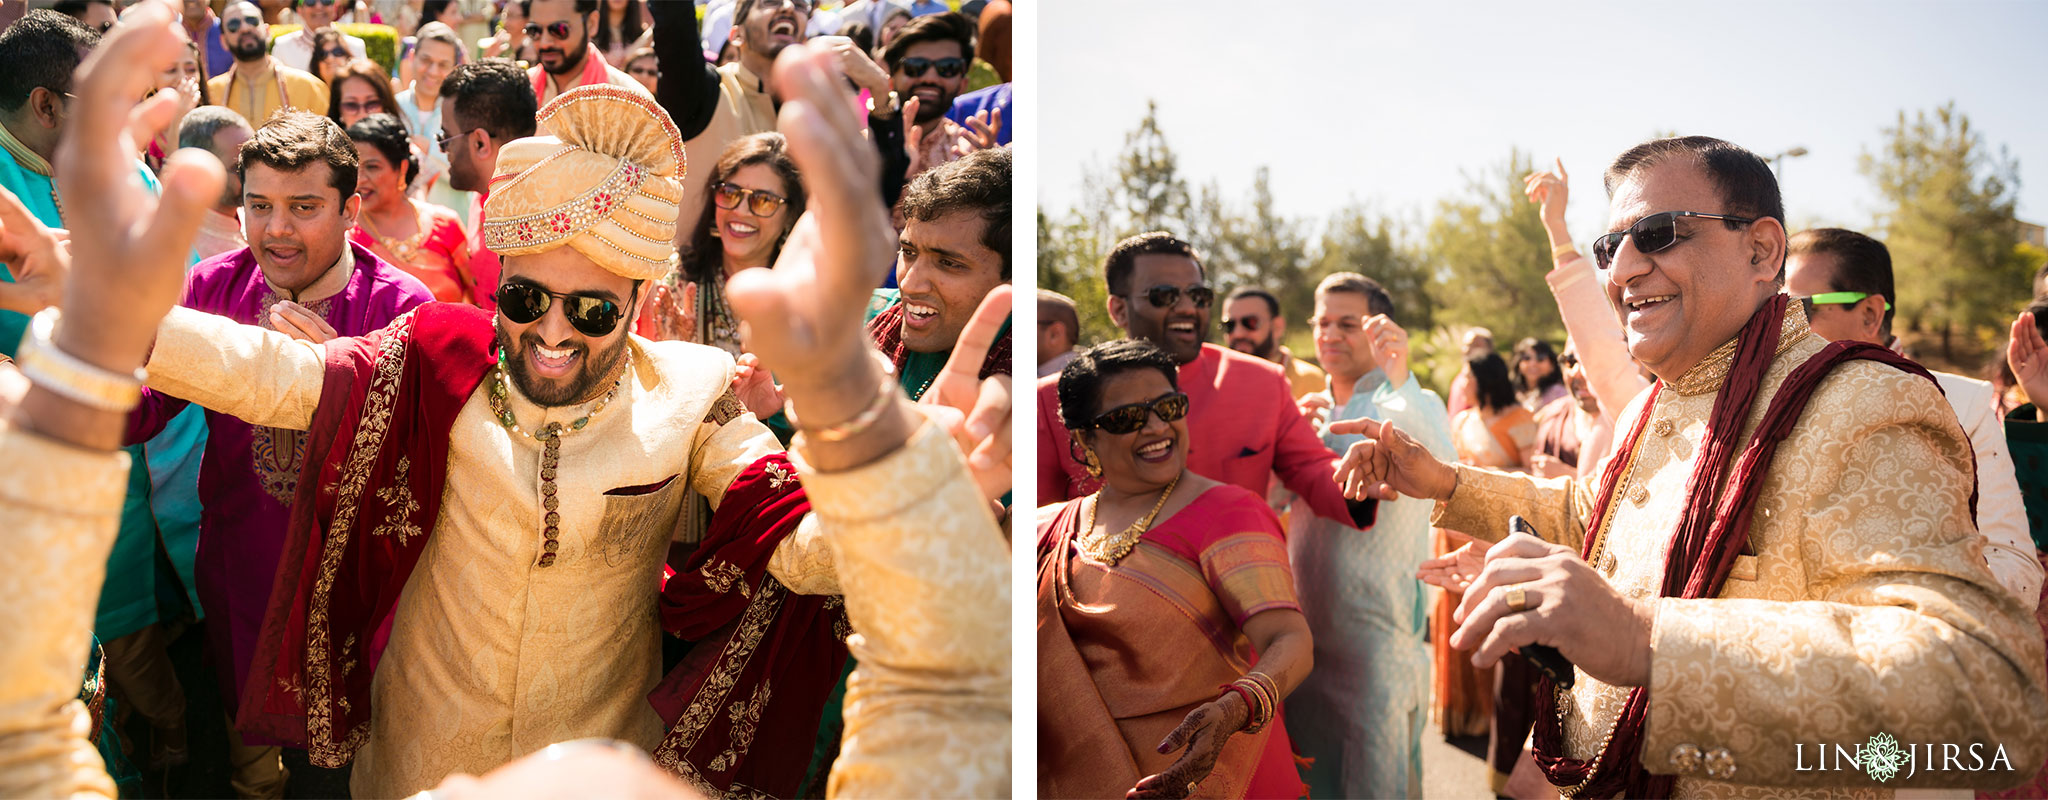 15 westridge gold club la habra indian wedding photography